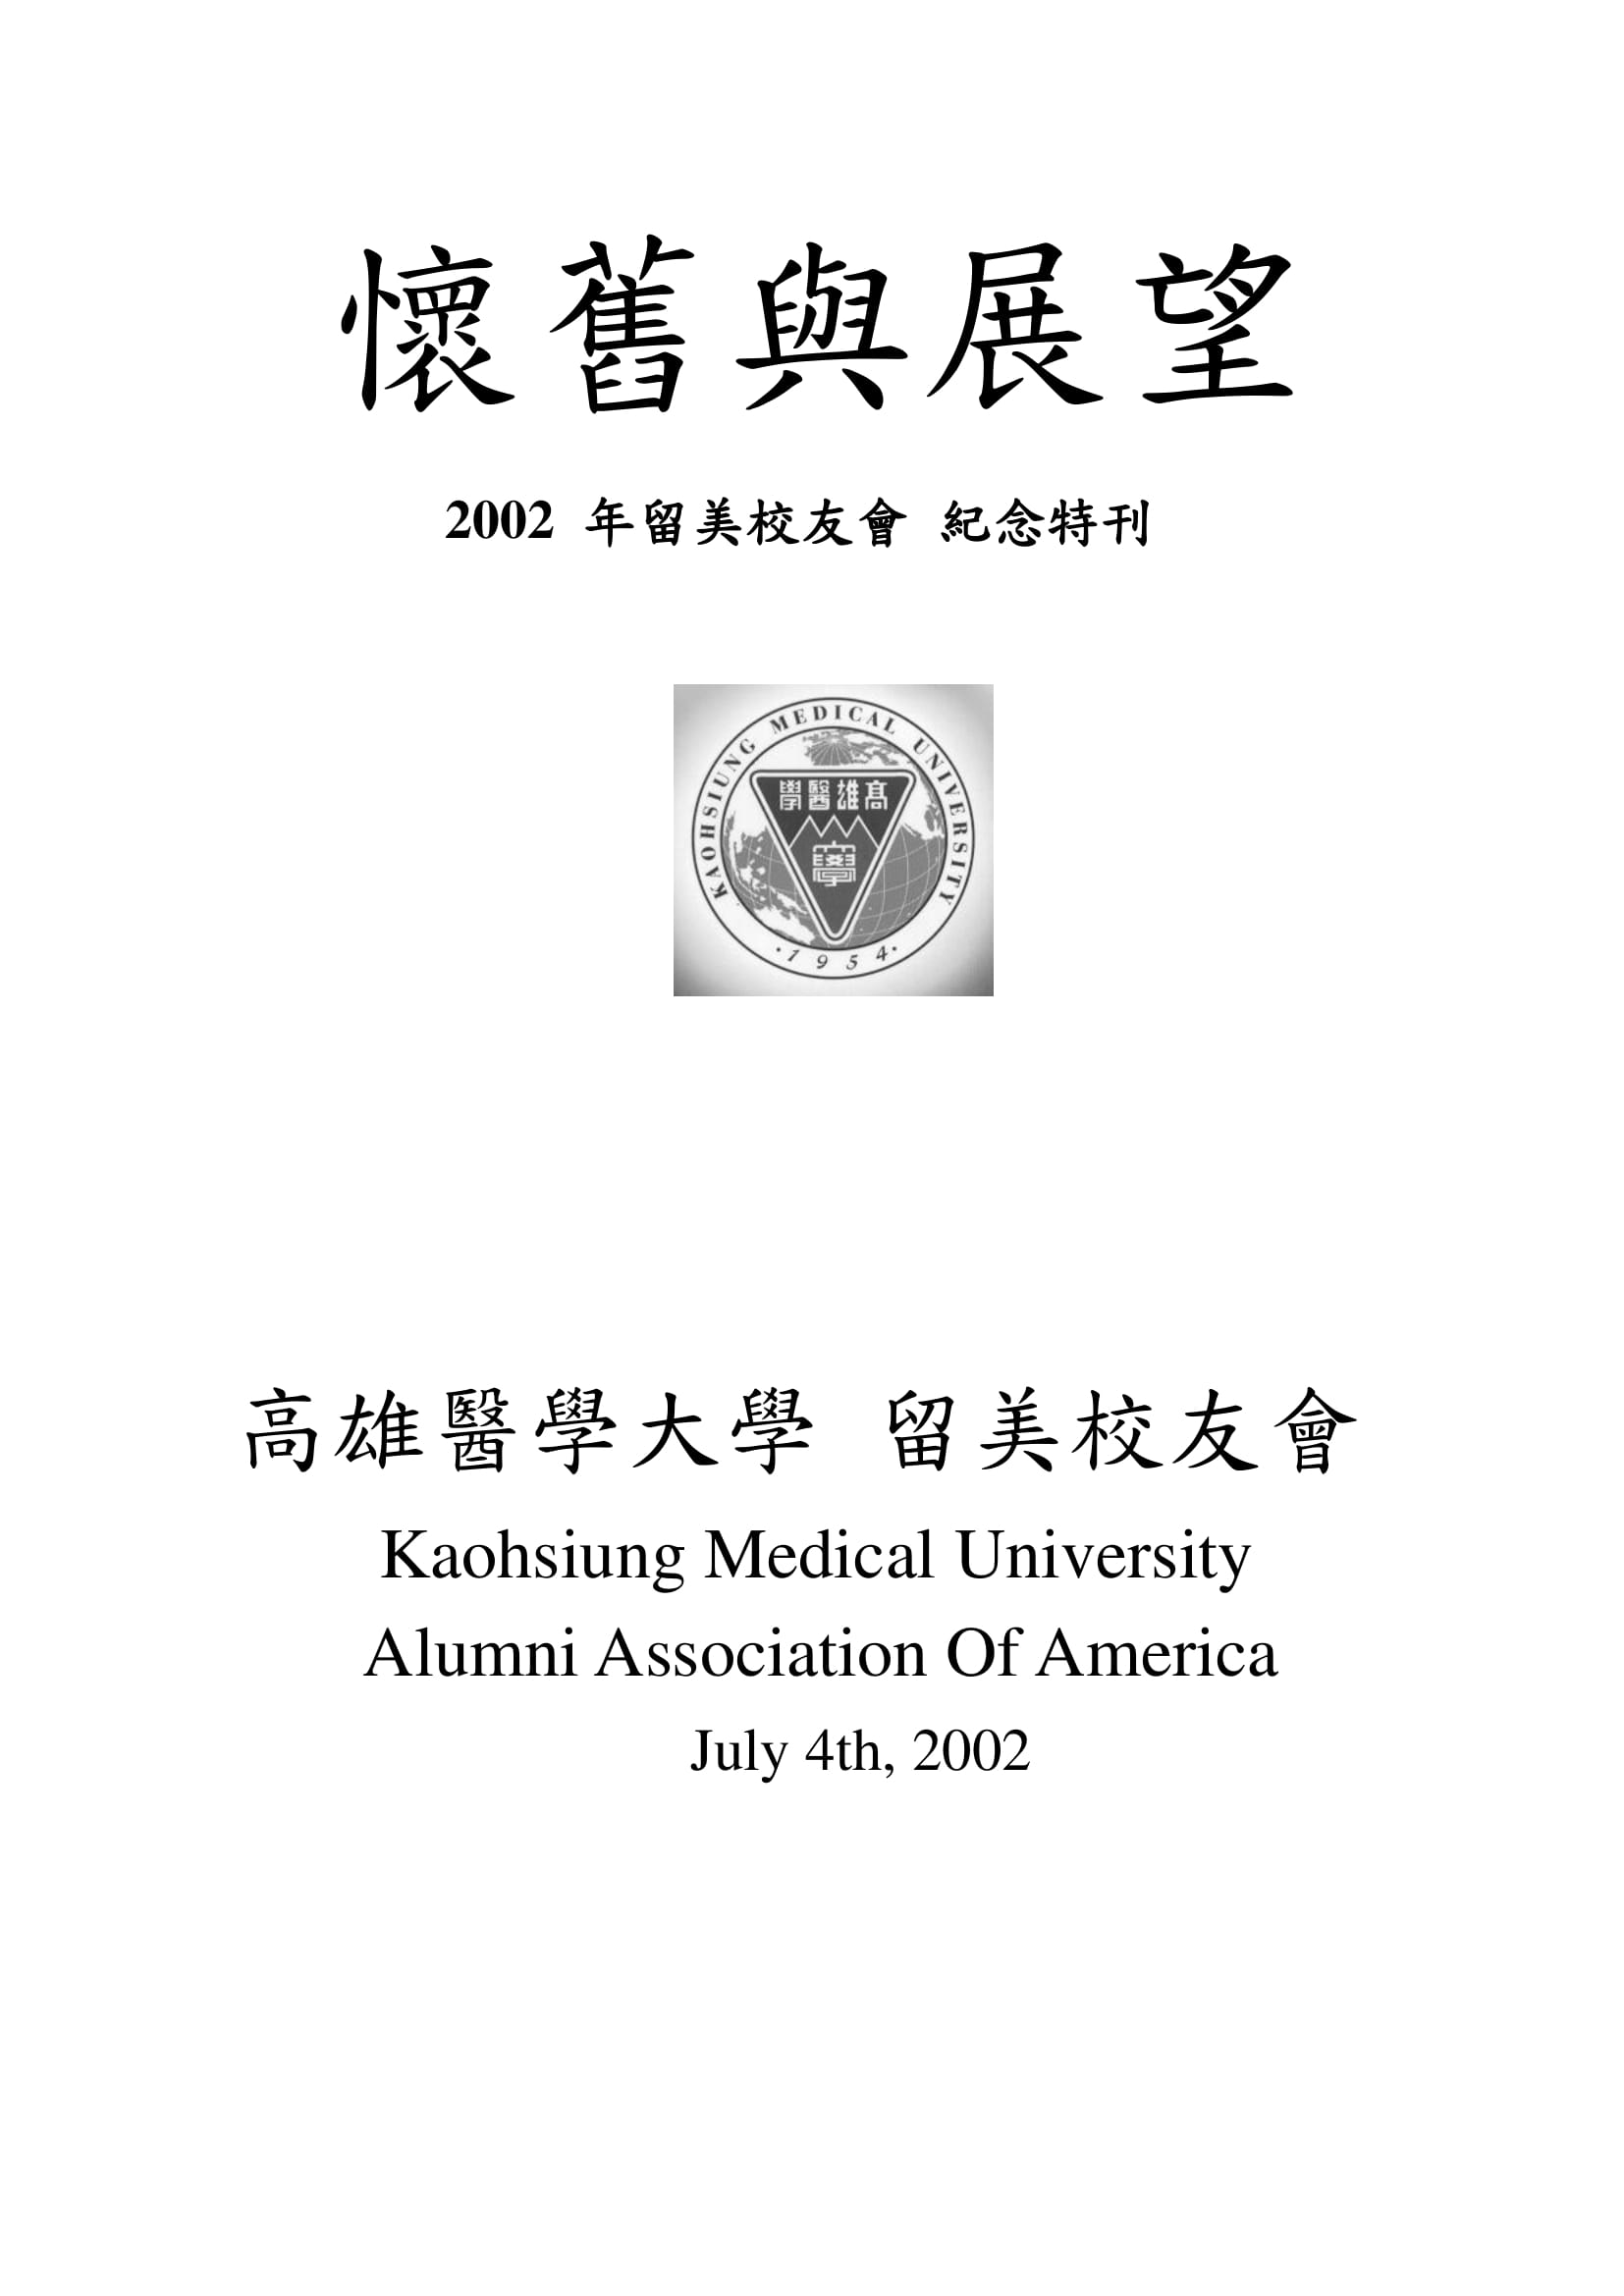 1335. Program Book of 2002 Kaohsiung Medical University America Alumni Association (KMUAAA) Los Angeles Convention / 高雄醫學大學北美校友會 /07/2002/Magazines/雜誌